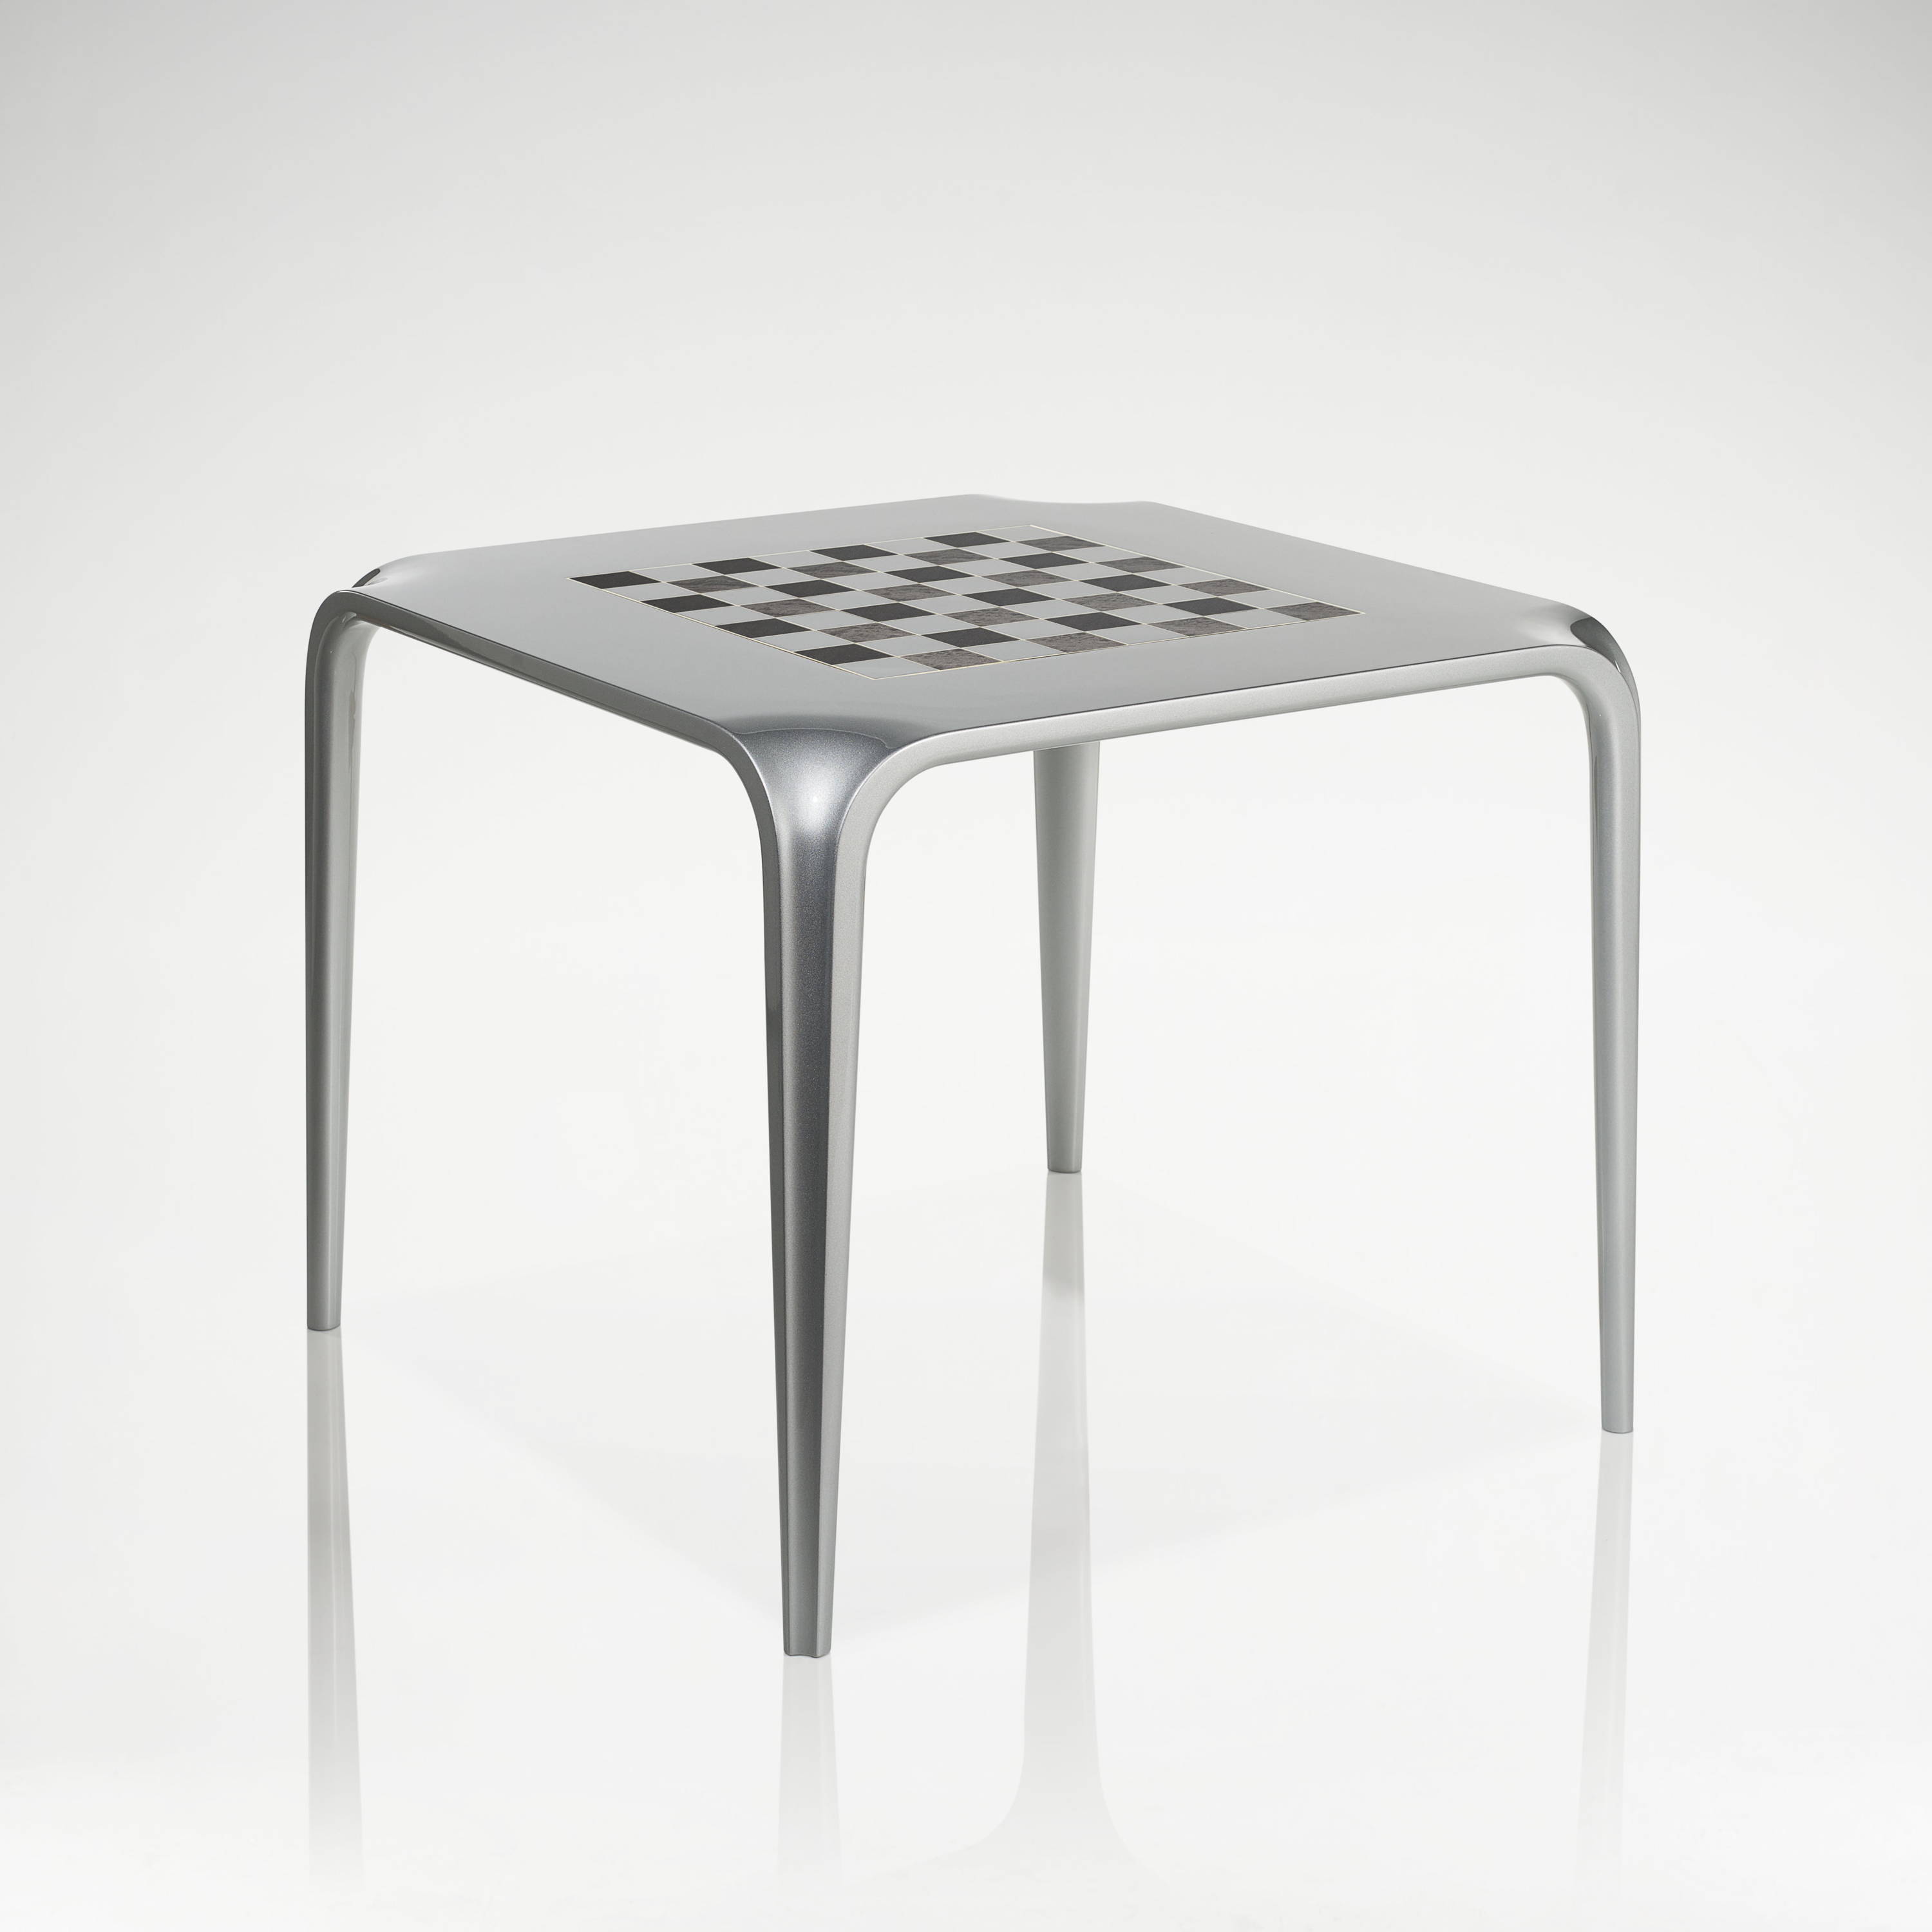 LINLEY Bespoke Games Tables | Bespoke Design & Luxury Furniture